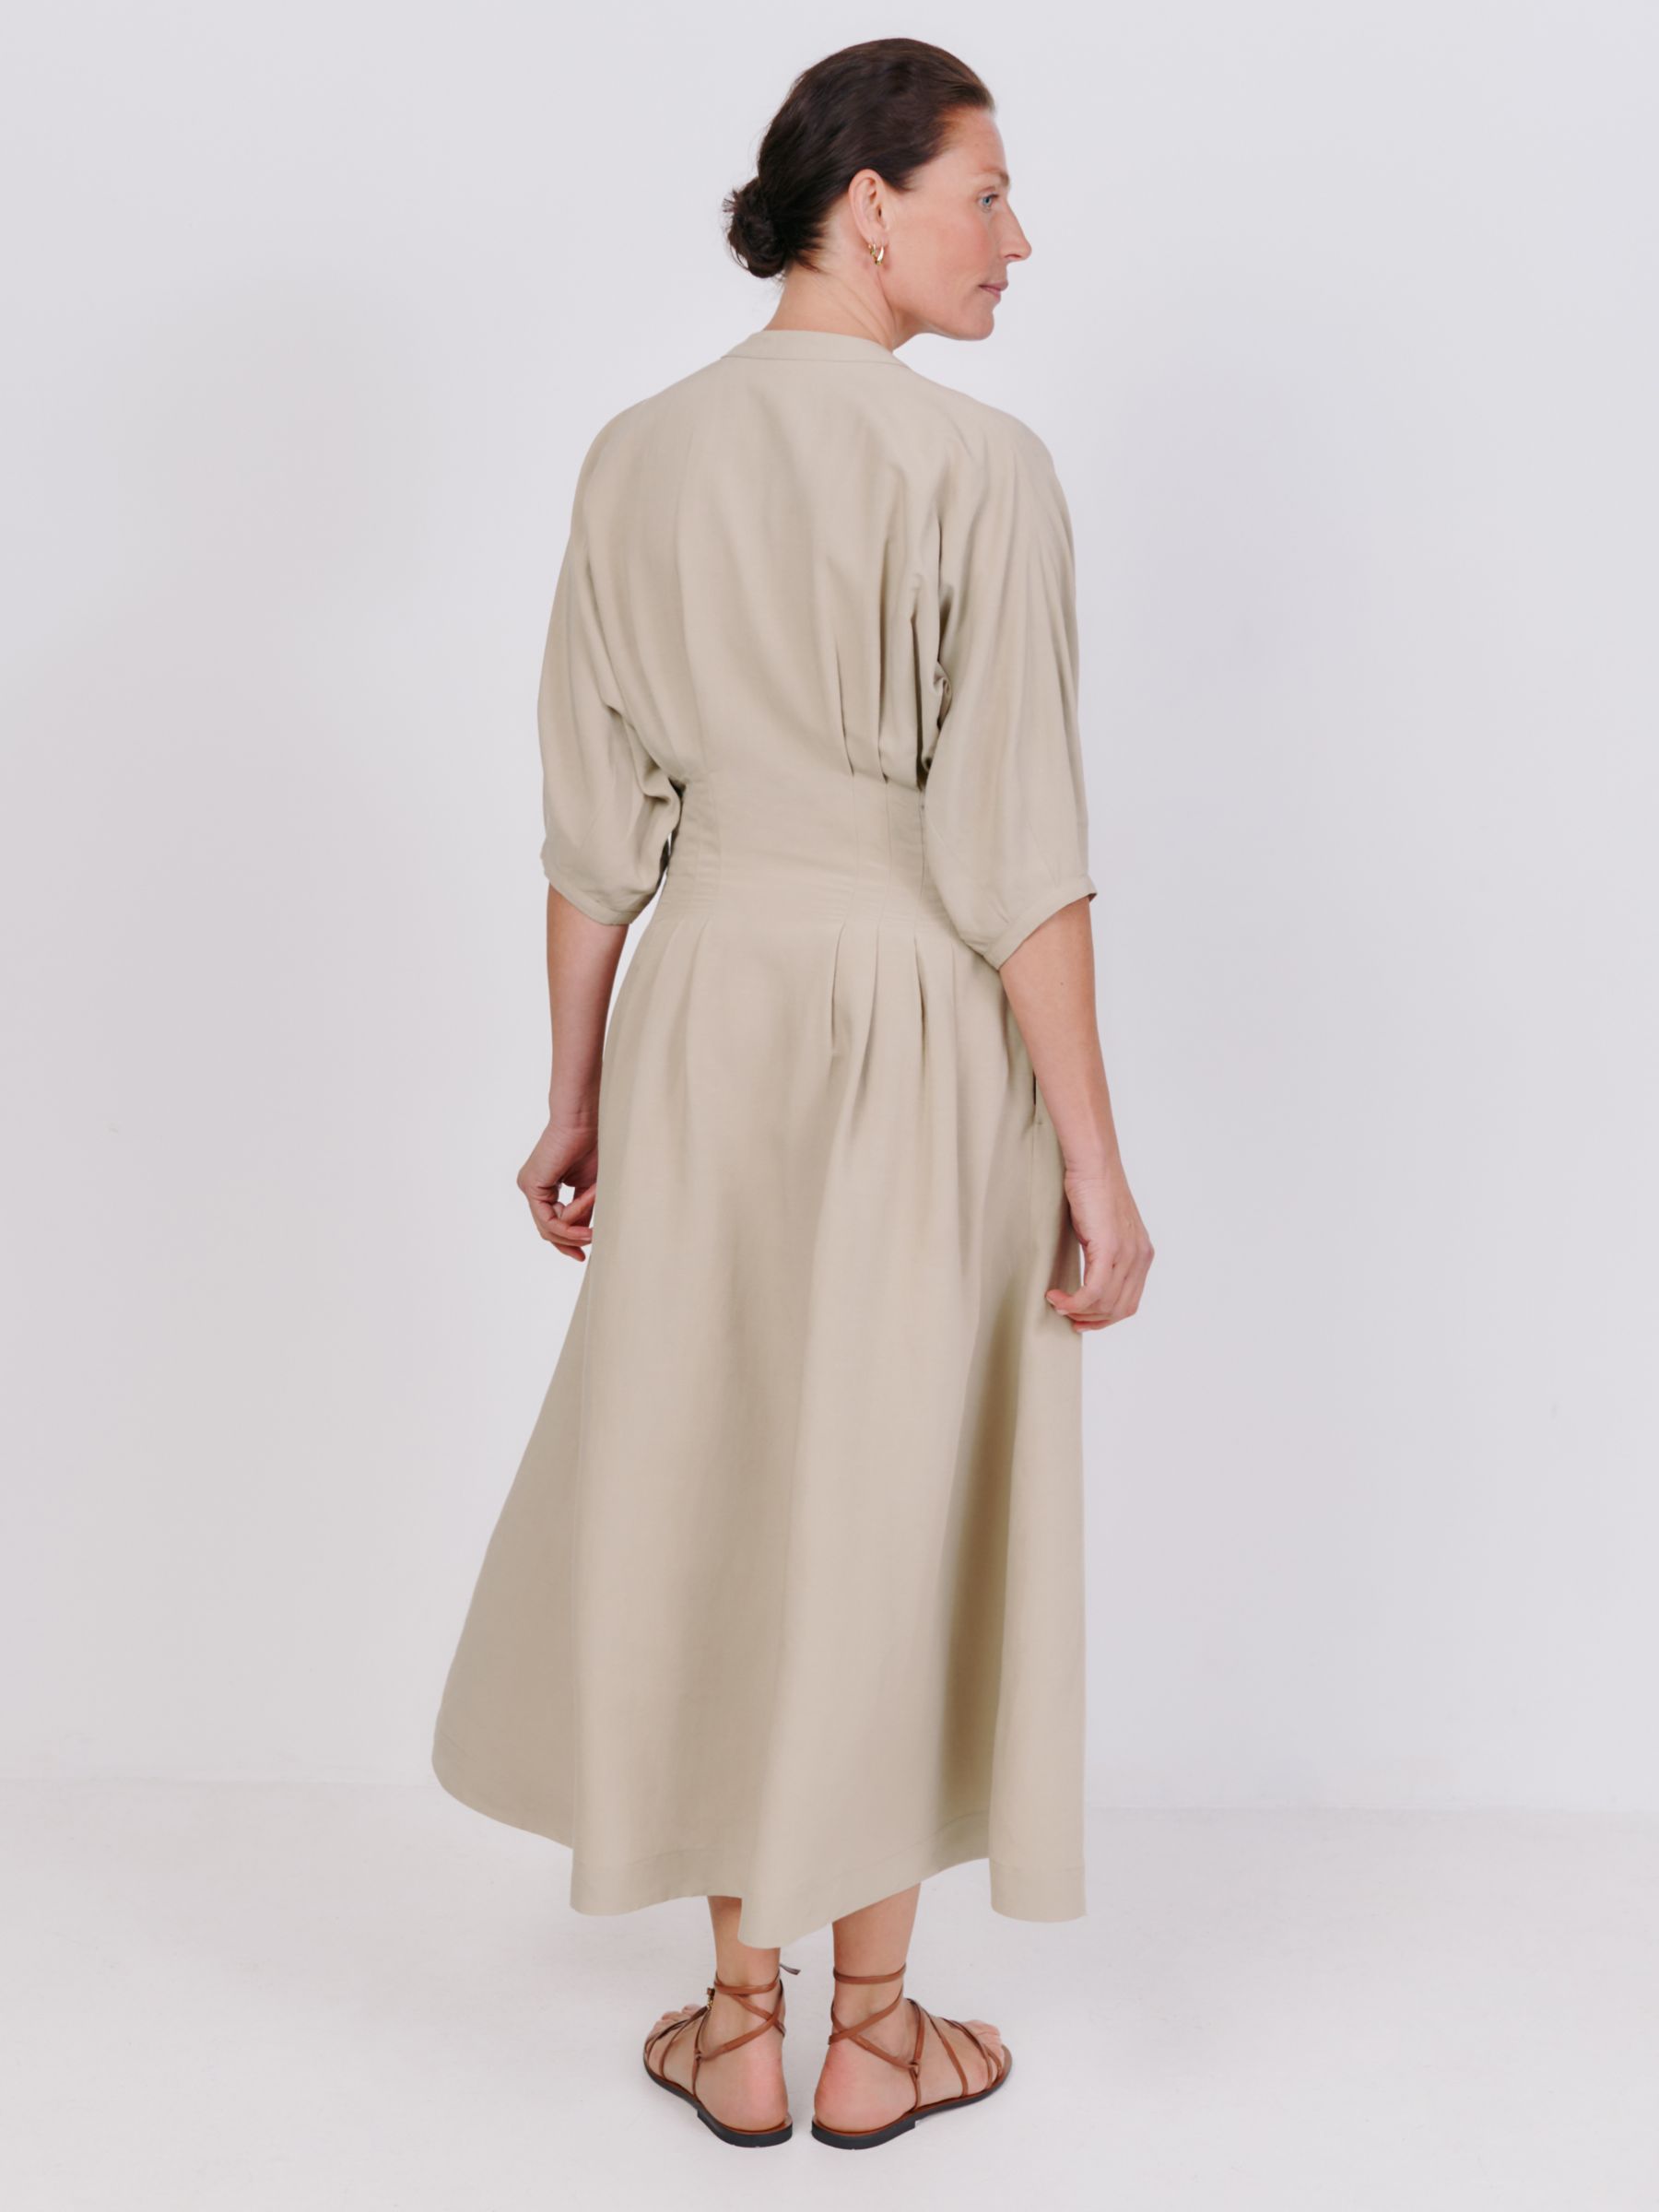 Buy Vivere By Savannah Miller Nova Pintuck Linen Blend Midi Dress, Camel Online at johnlewis.com